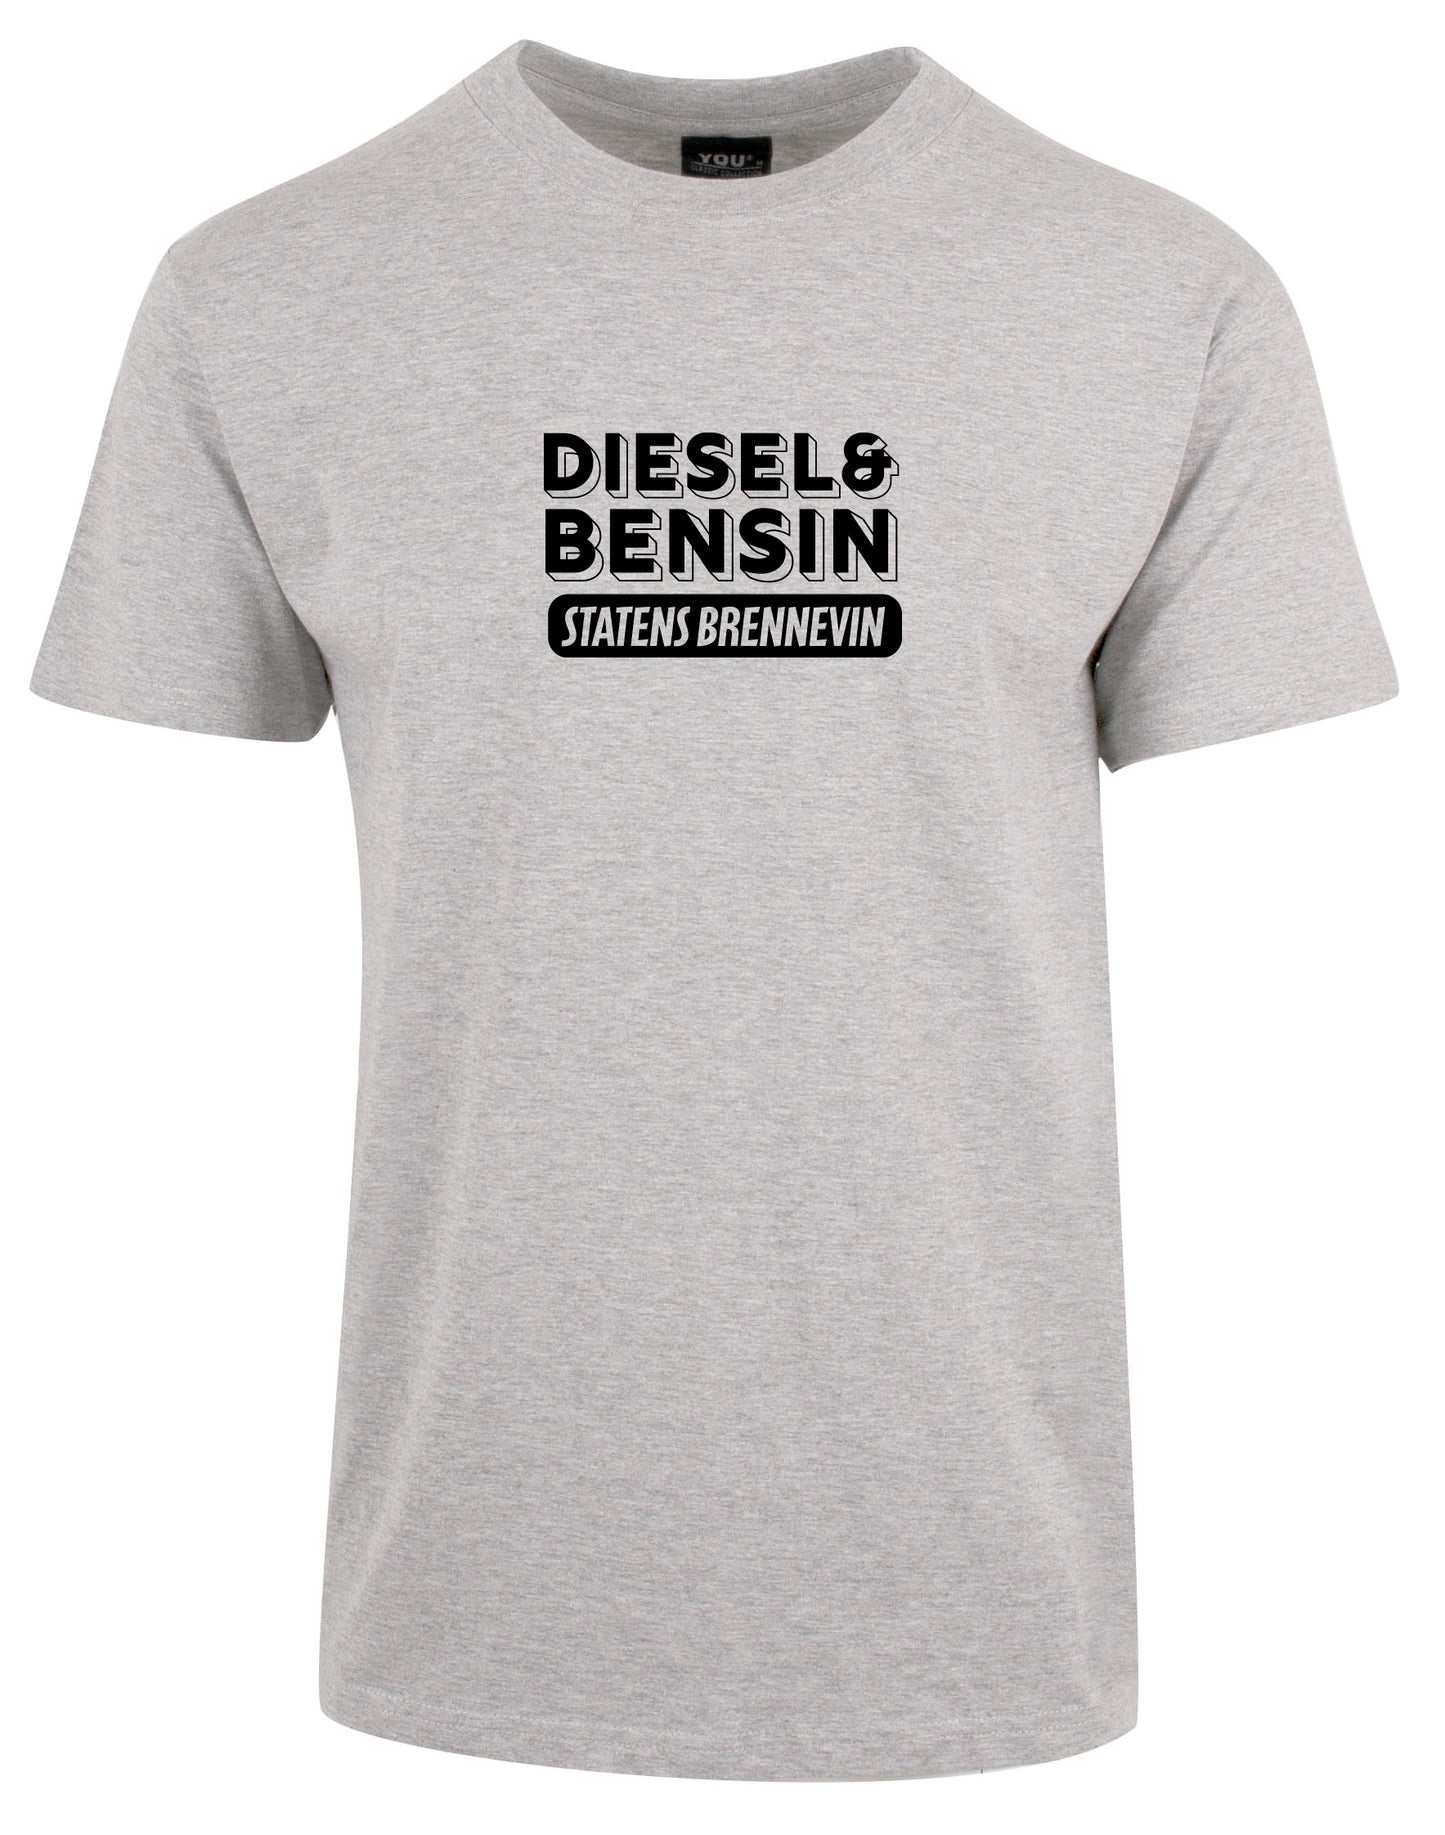 Diesel & Bensin - t-skjorte